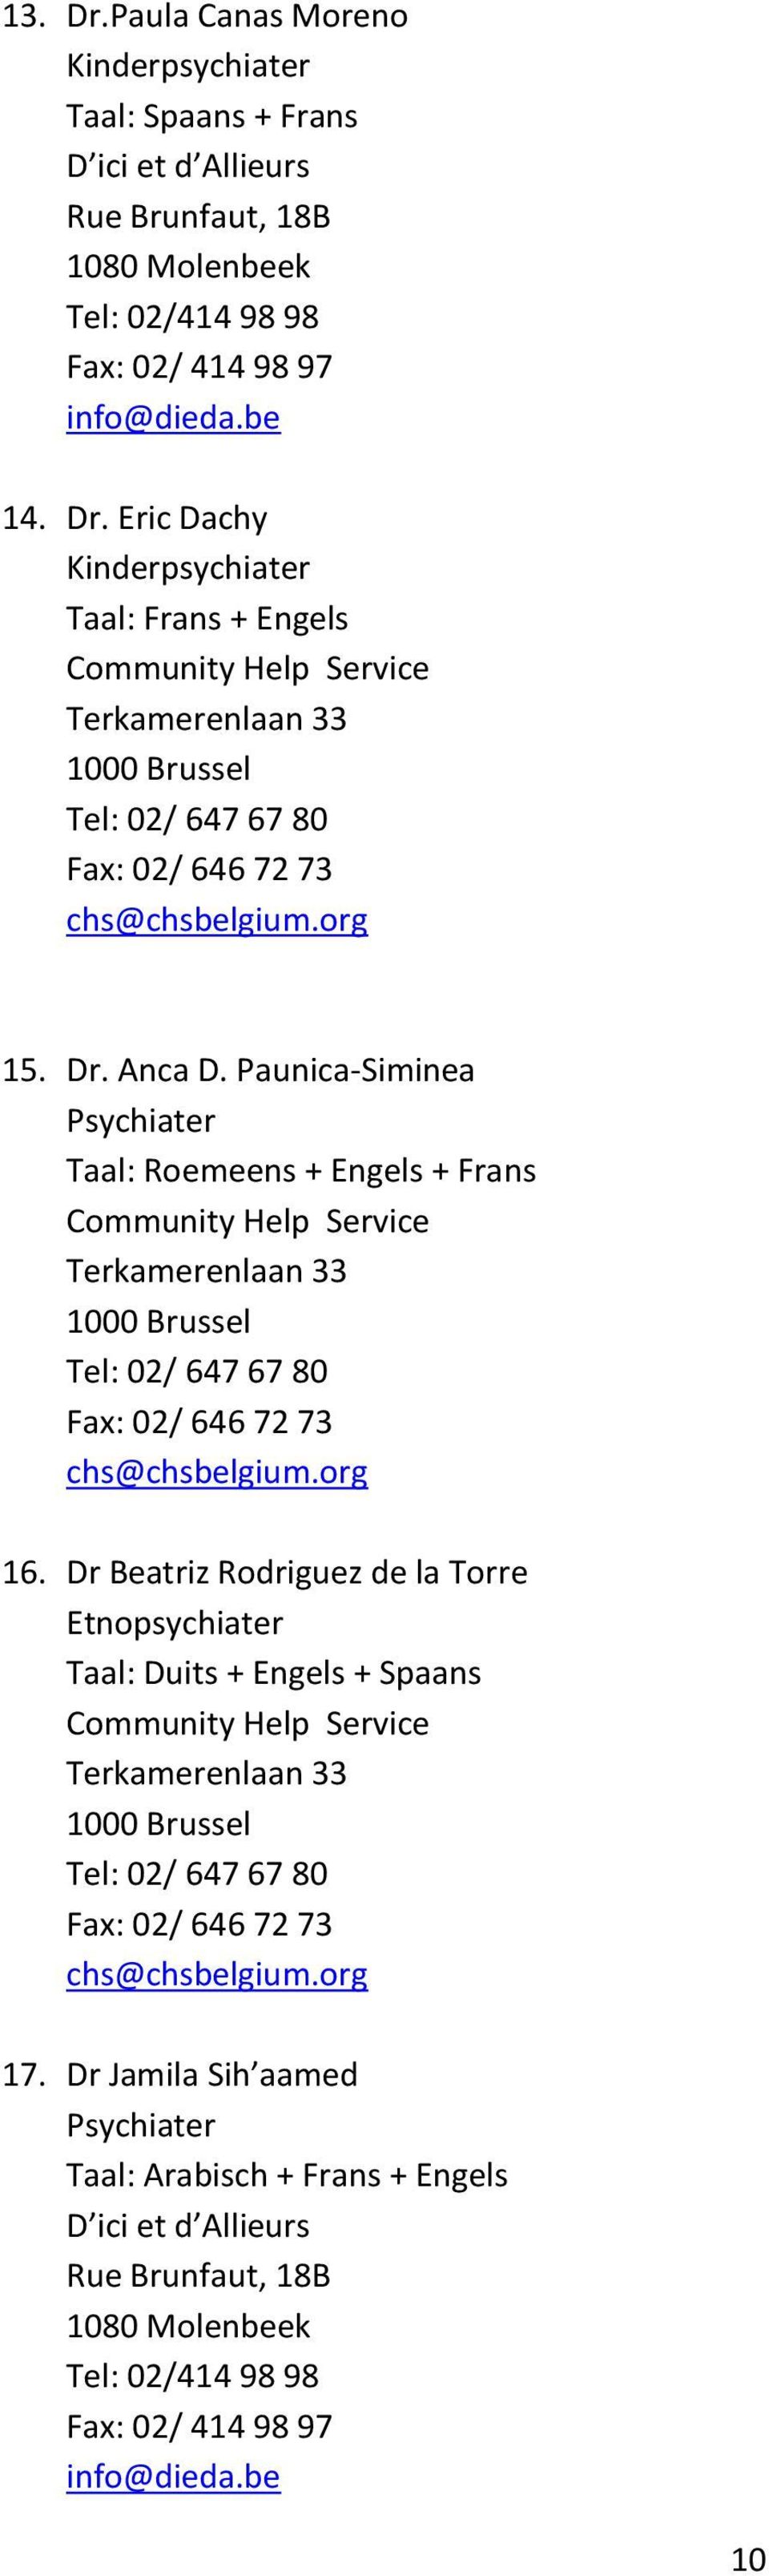 Dr Beatriz Rodriguez de la Torre Etnopsychiater Taal: Duits + Engels + Spaans Community Help Service Terkamerenlaan 33 Tel: 02/ 647 67 80 Fax: 02/ 646 72 73 chs@chsbelgium.org 17.